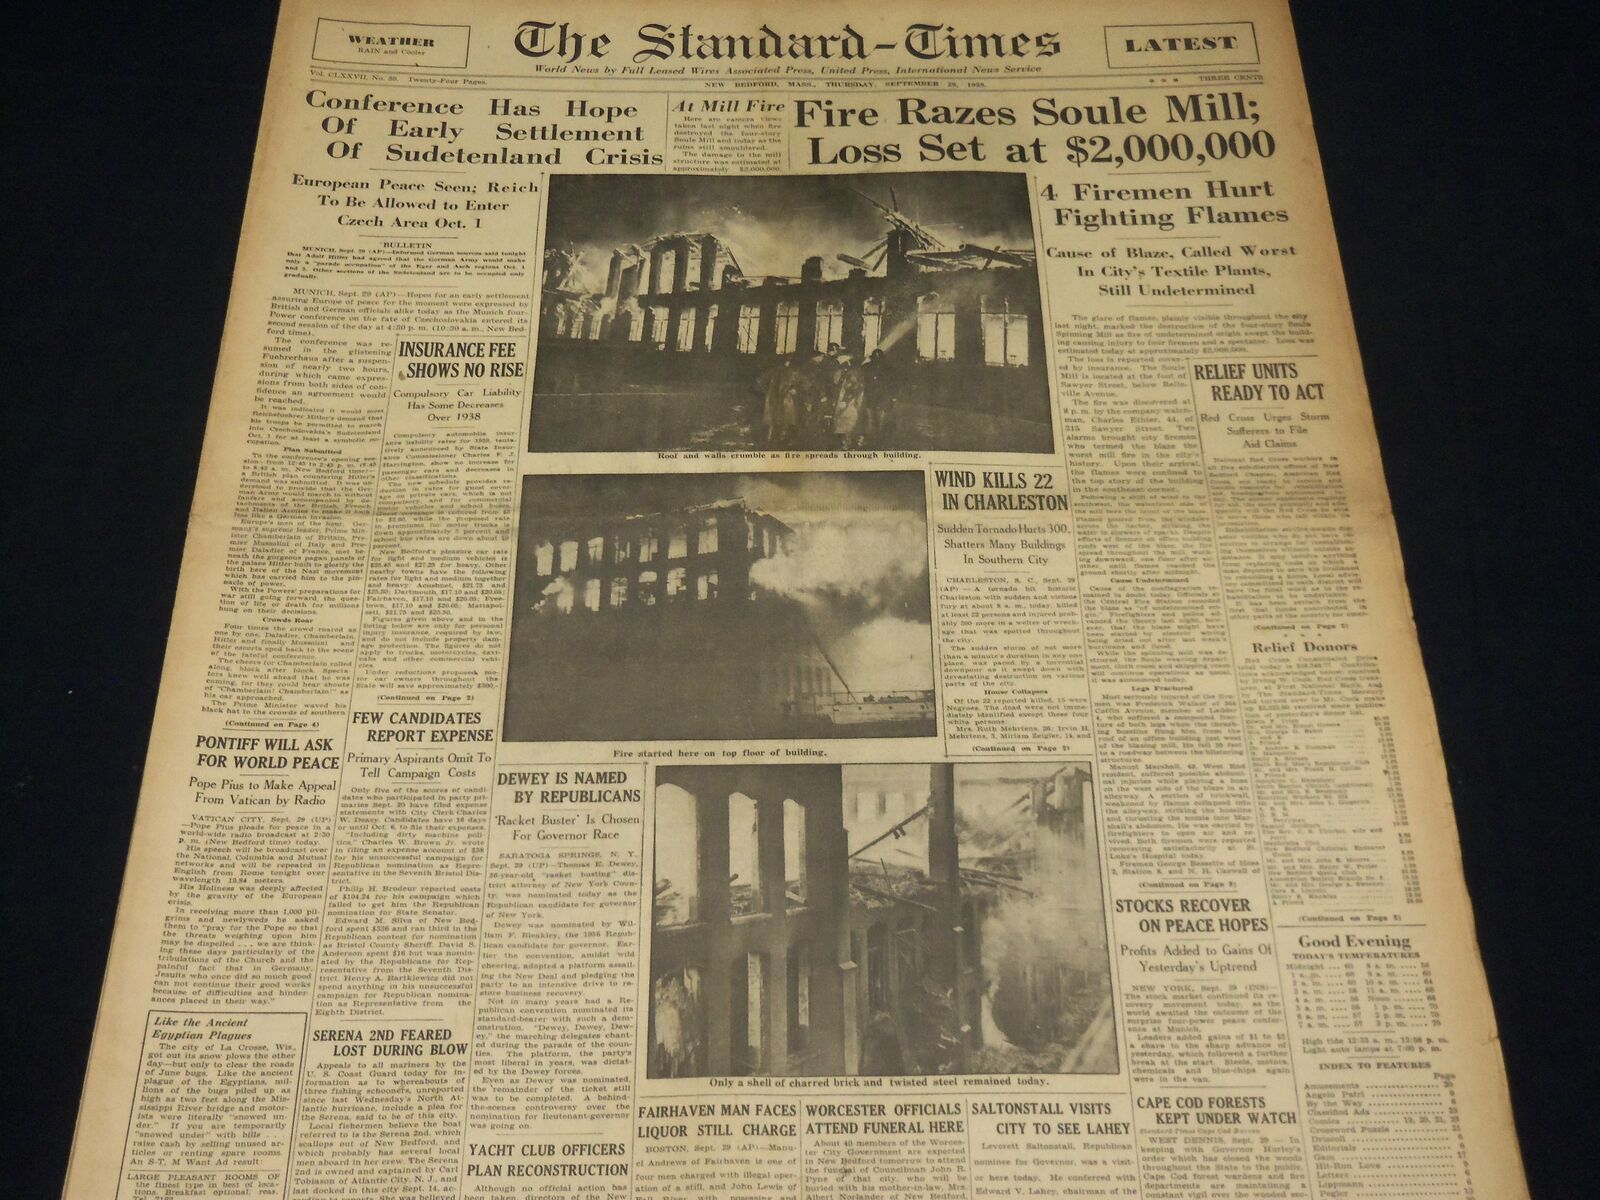 1938 SEPTEMBER 29 NEW BEDFORD STANDARD TIMES - FIRE RAZES SOULE MILL - NT 8915